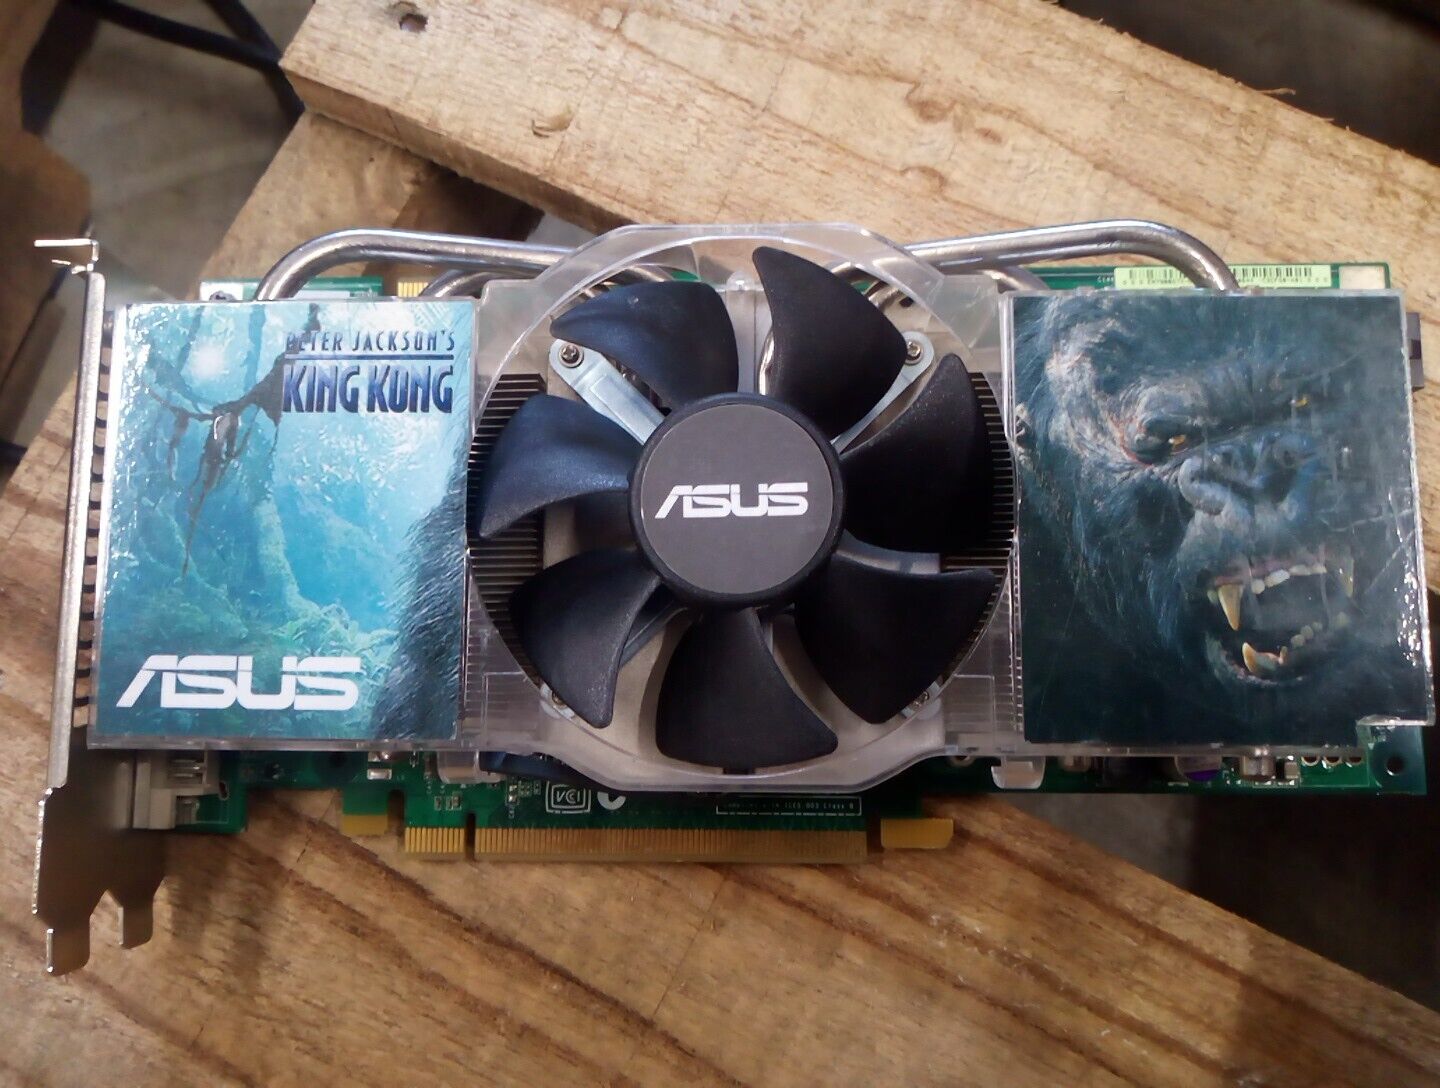 Asus Geforce EN7900GTX KING KONG Edition